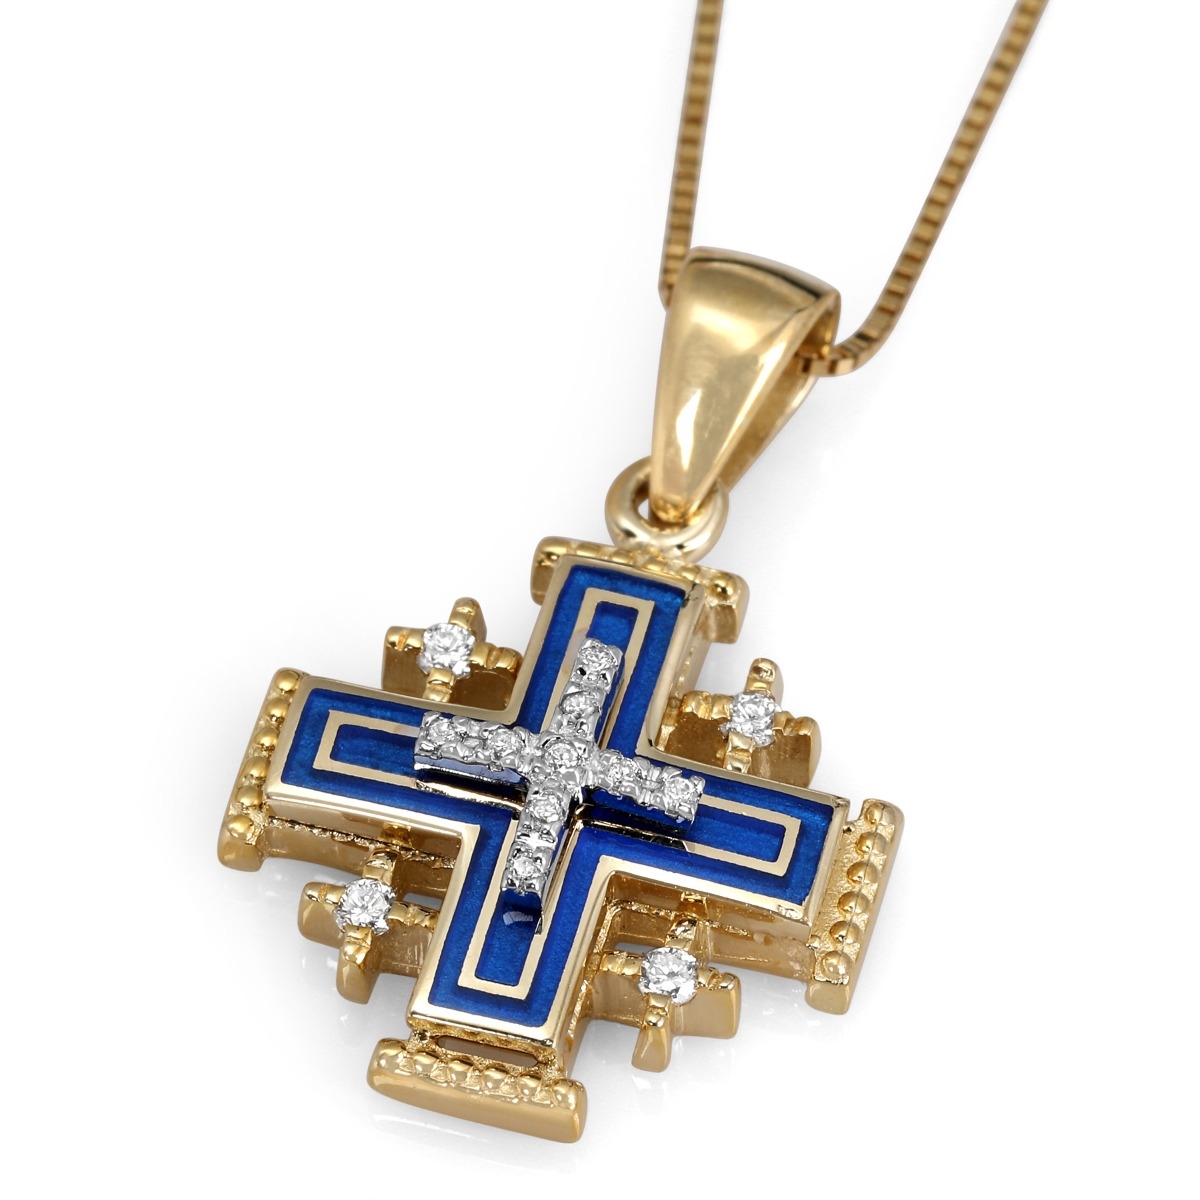 Anbinder Jewelry 14K Yellow Gold and Enamel Milgrain Classic Jerusalem Cross Pendant with 13 Diamonds - 1